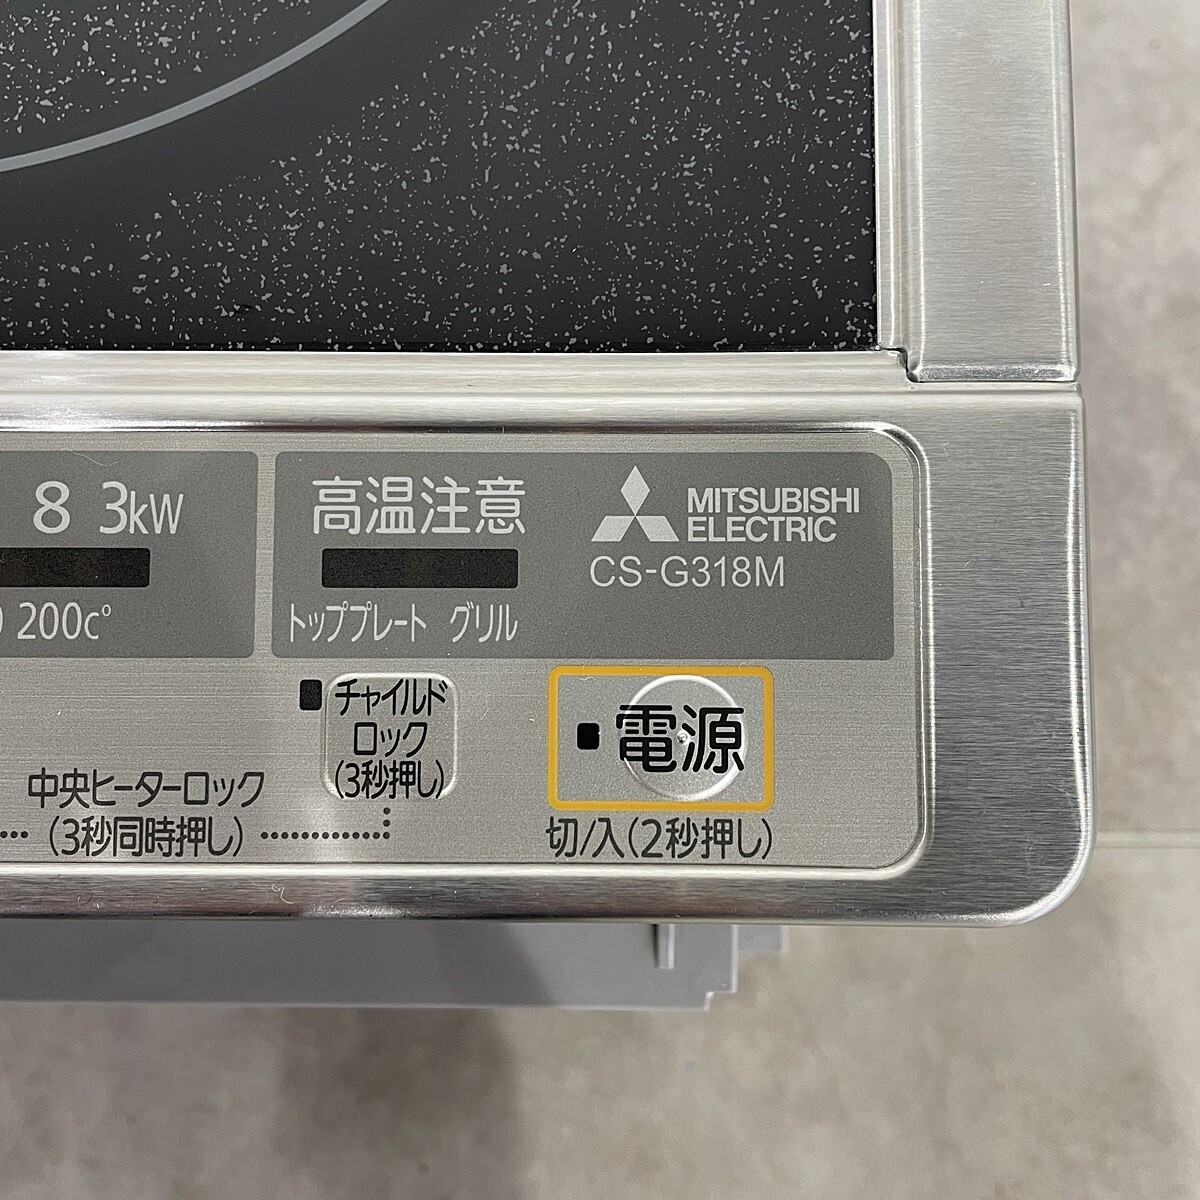 [ Osaka ]MITSUBISHI Mitsubishi IH cooking heater built-in / body /CS-G318M/2018 year made / not yet electrification /mote Leroux m installation goods [RN0411-1]